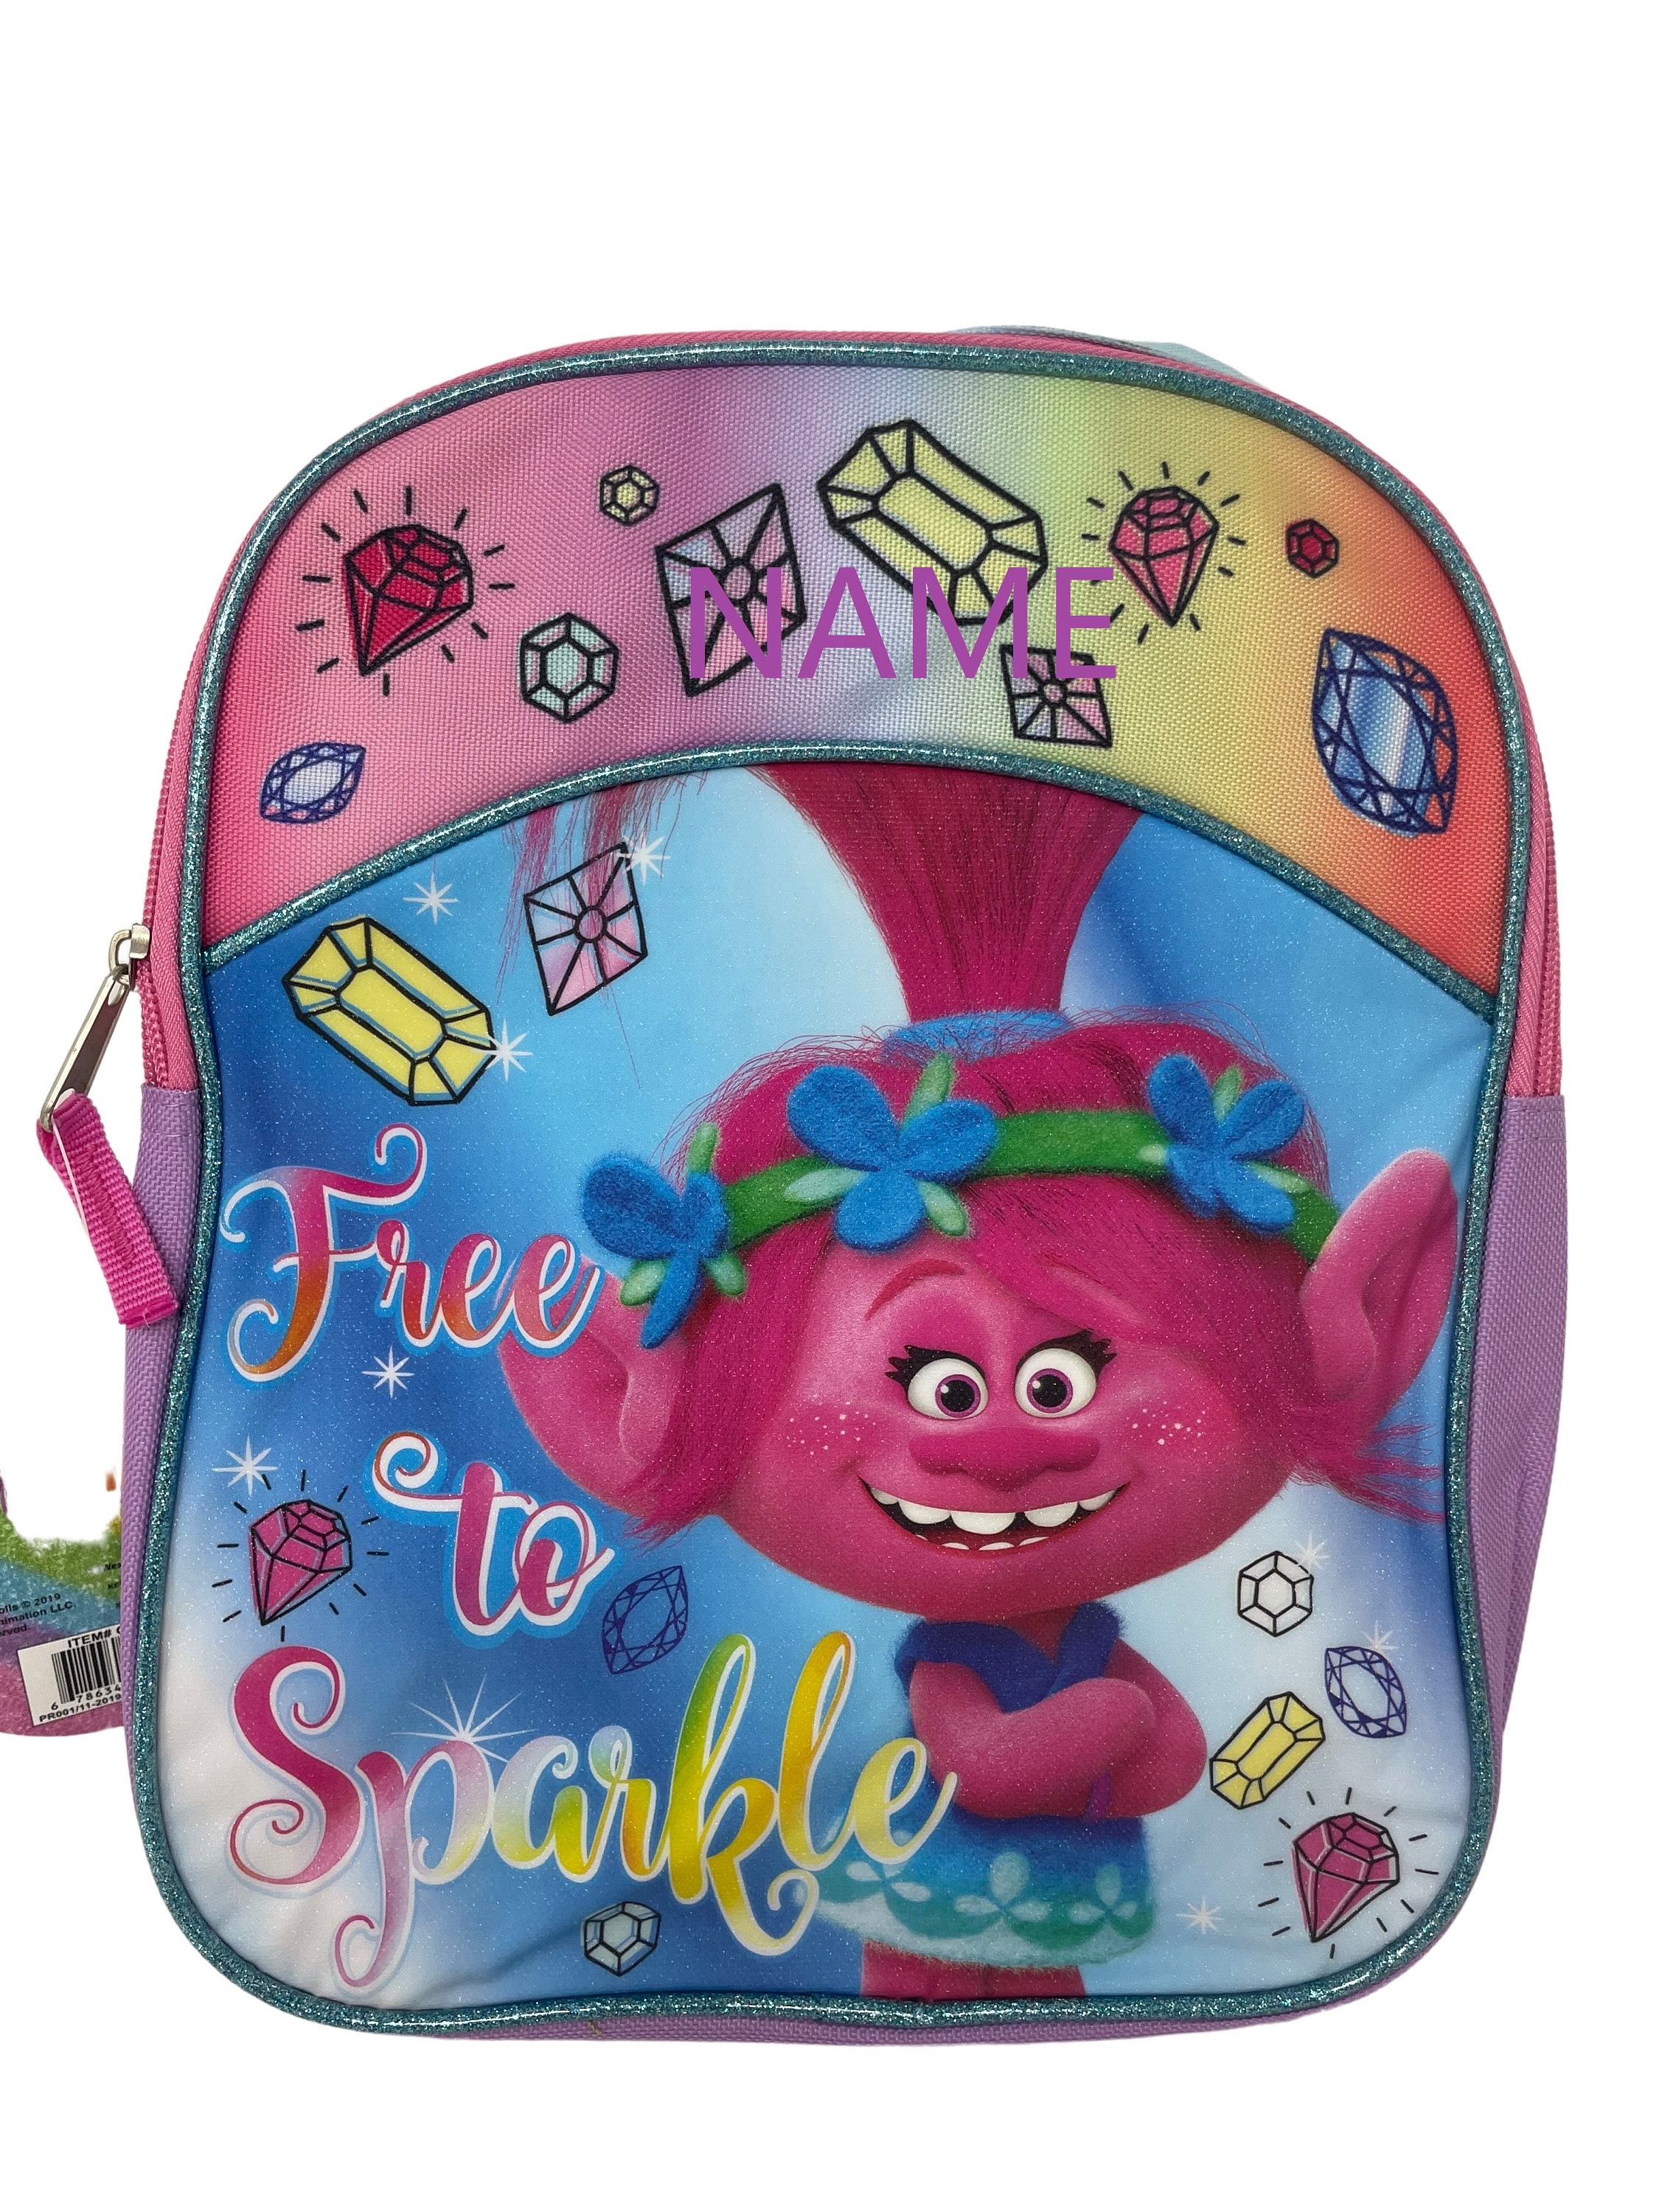 Fast Forward trolls lunch box and water bottle set for girls - trolls  school supplies bundle with